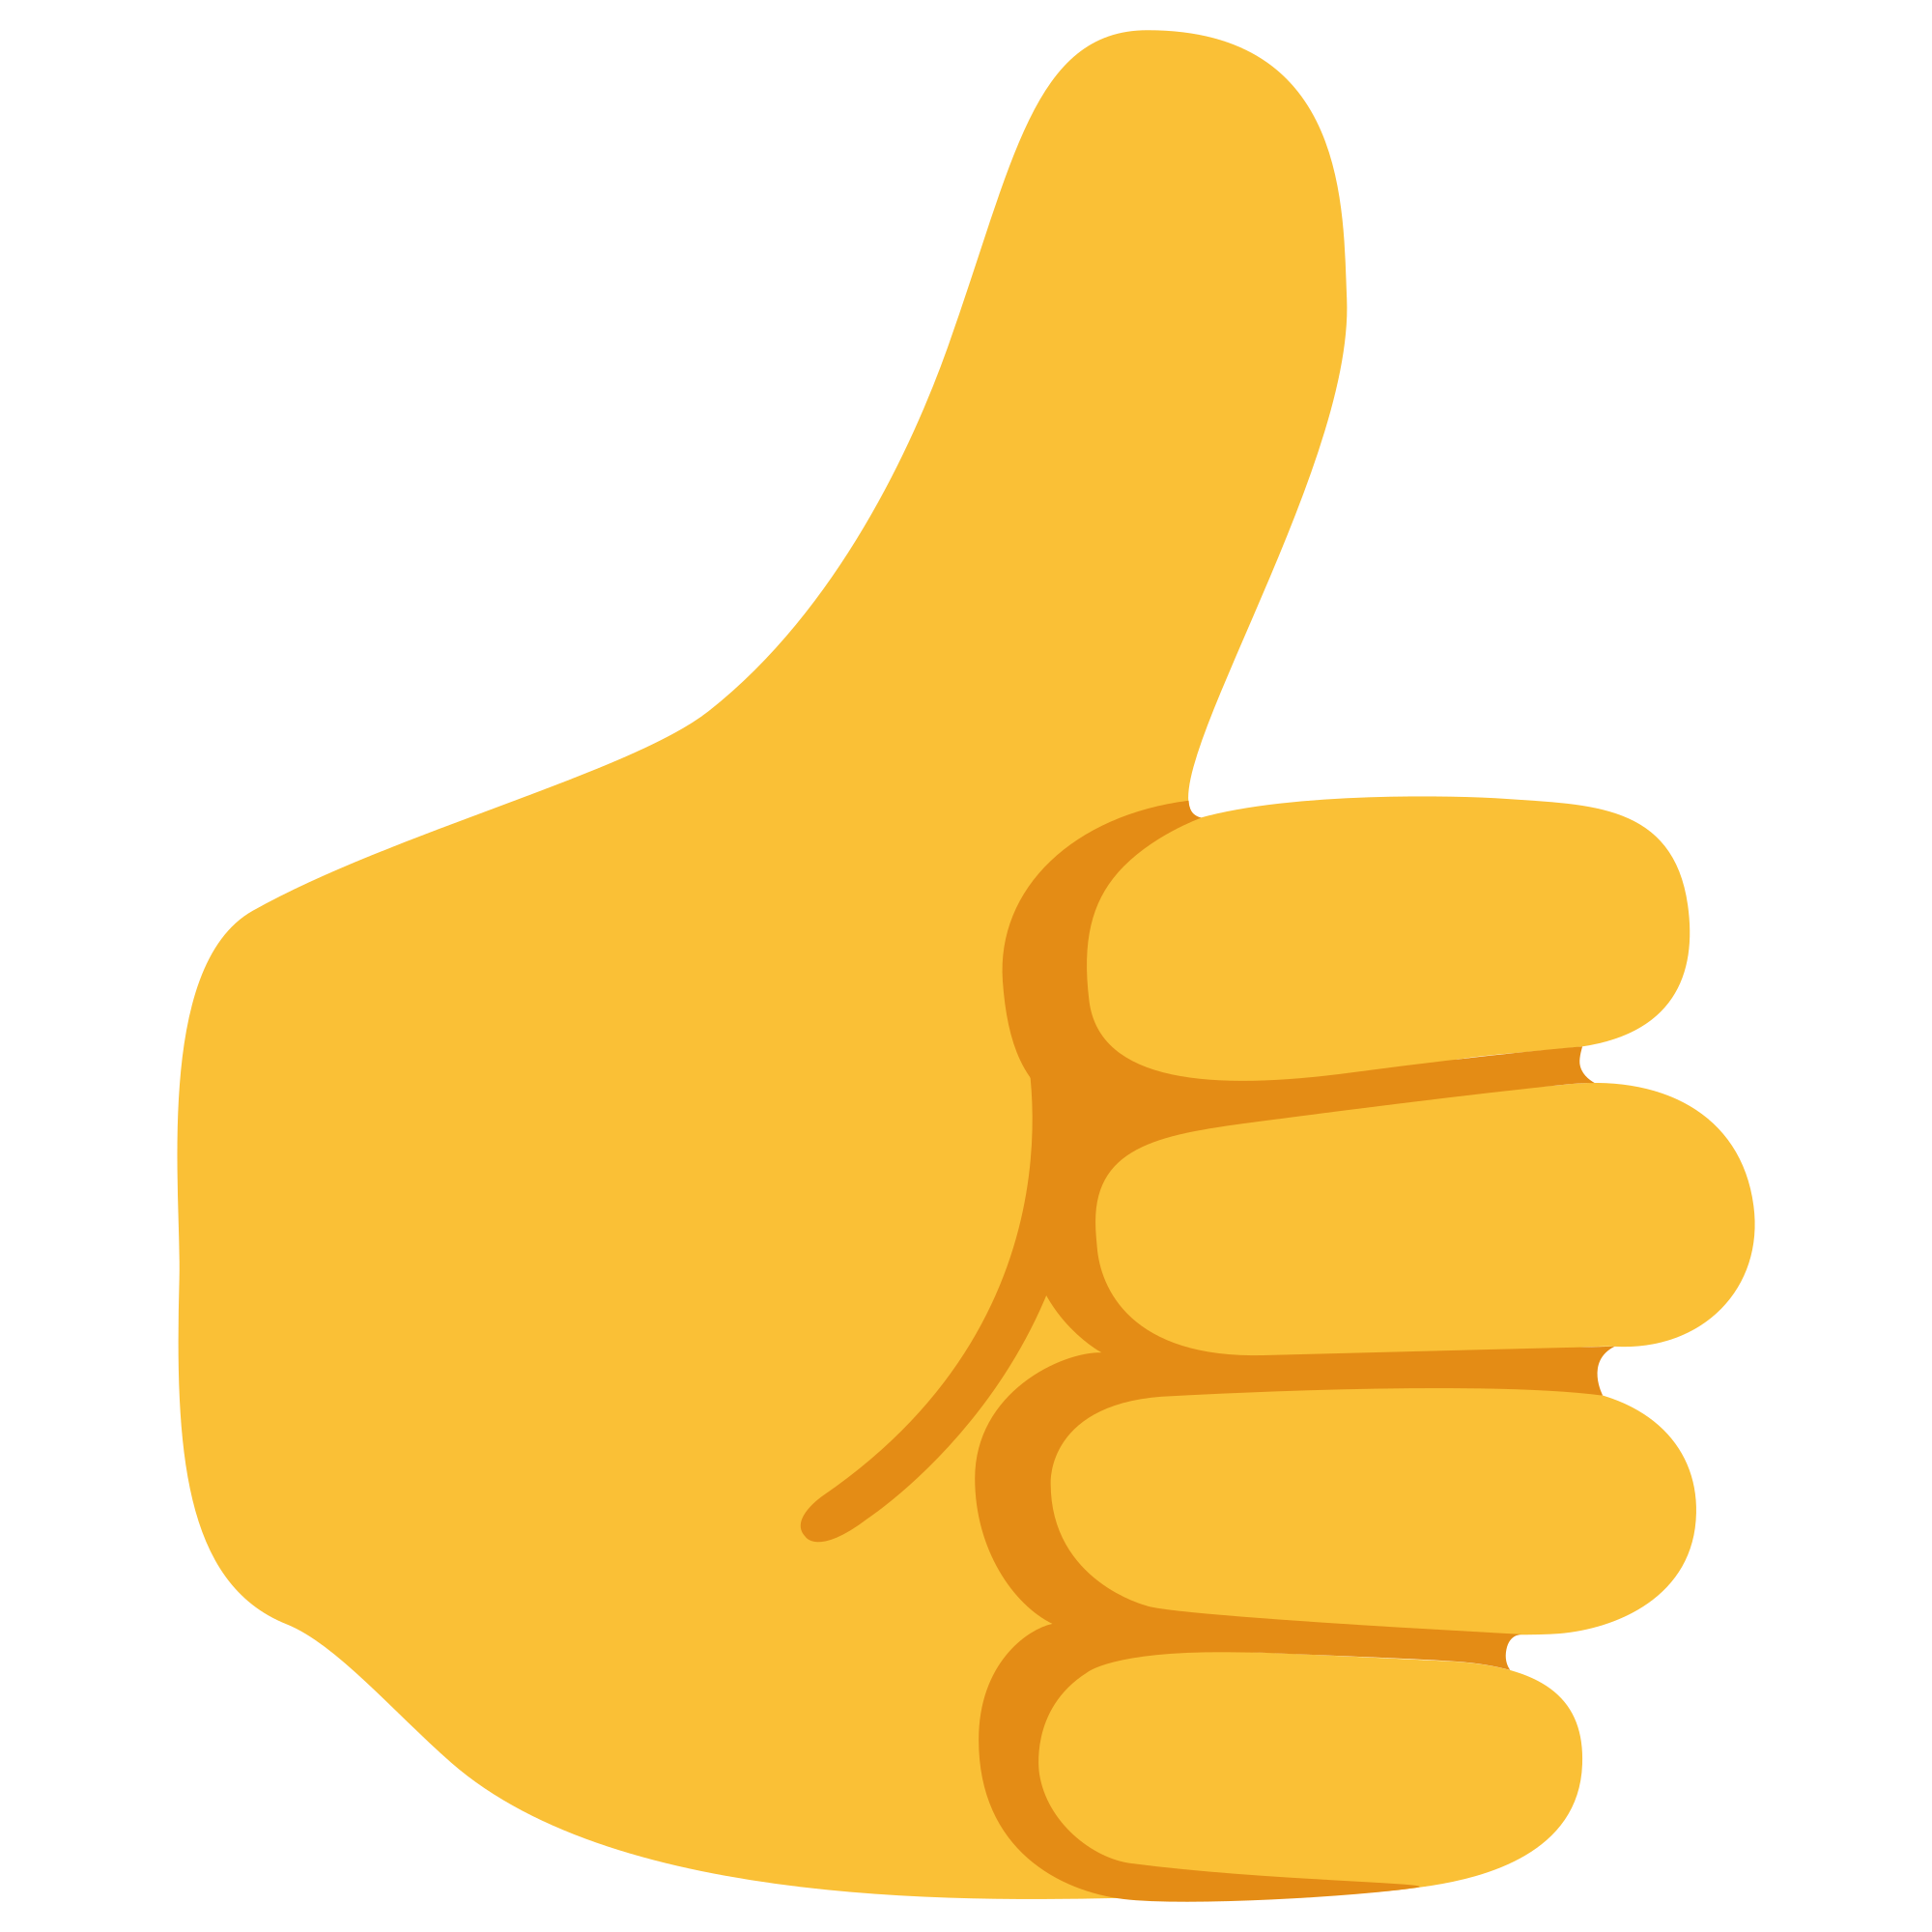 Thumbs Up Emoji PNG Photo